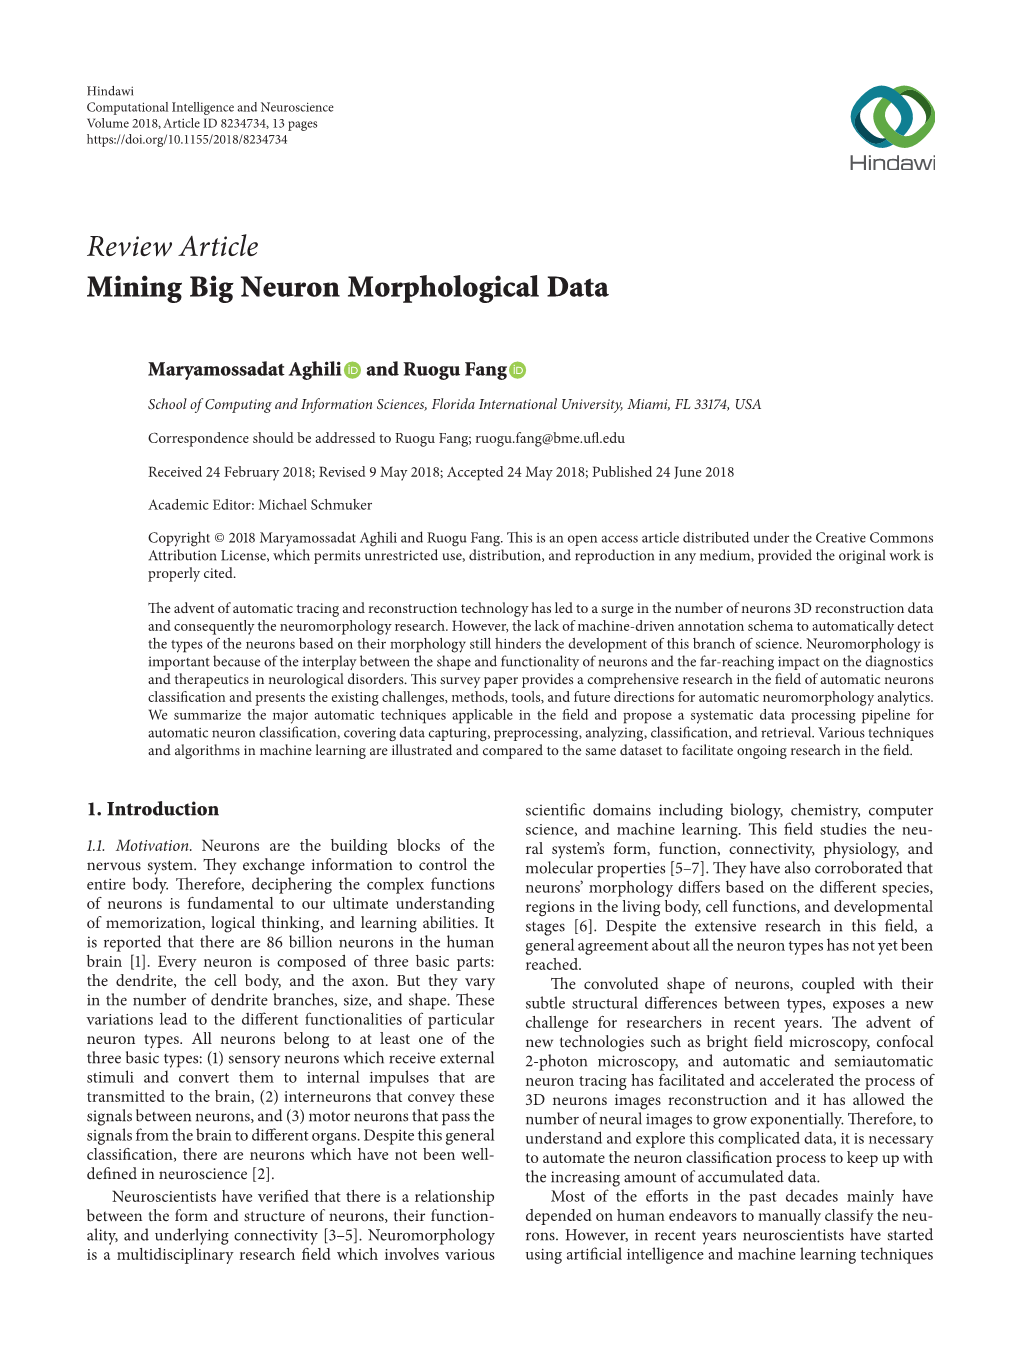 Mining Big Neuron Morphological Data